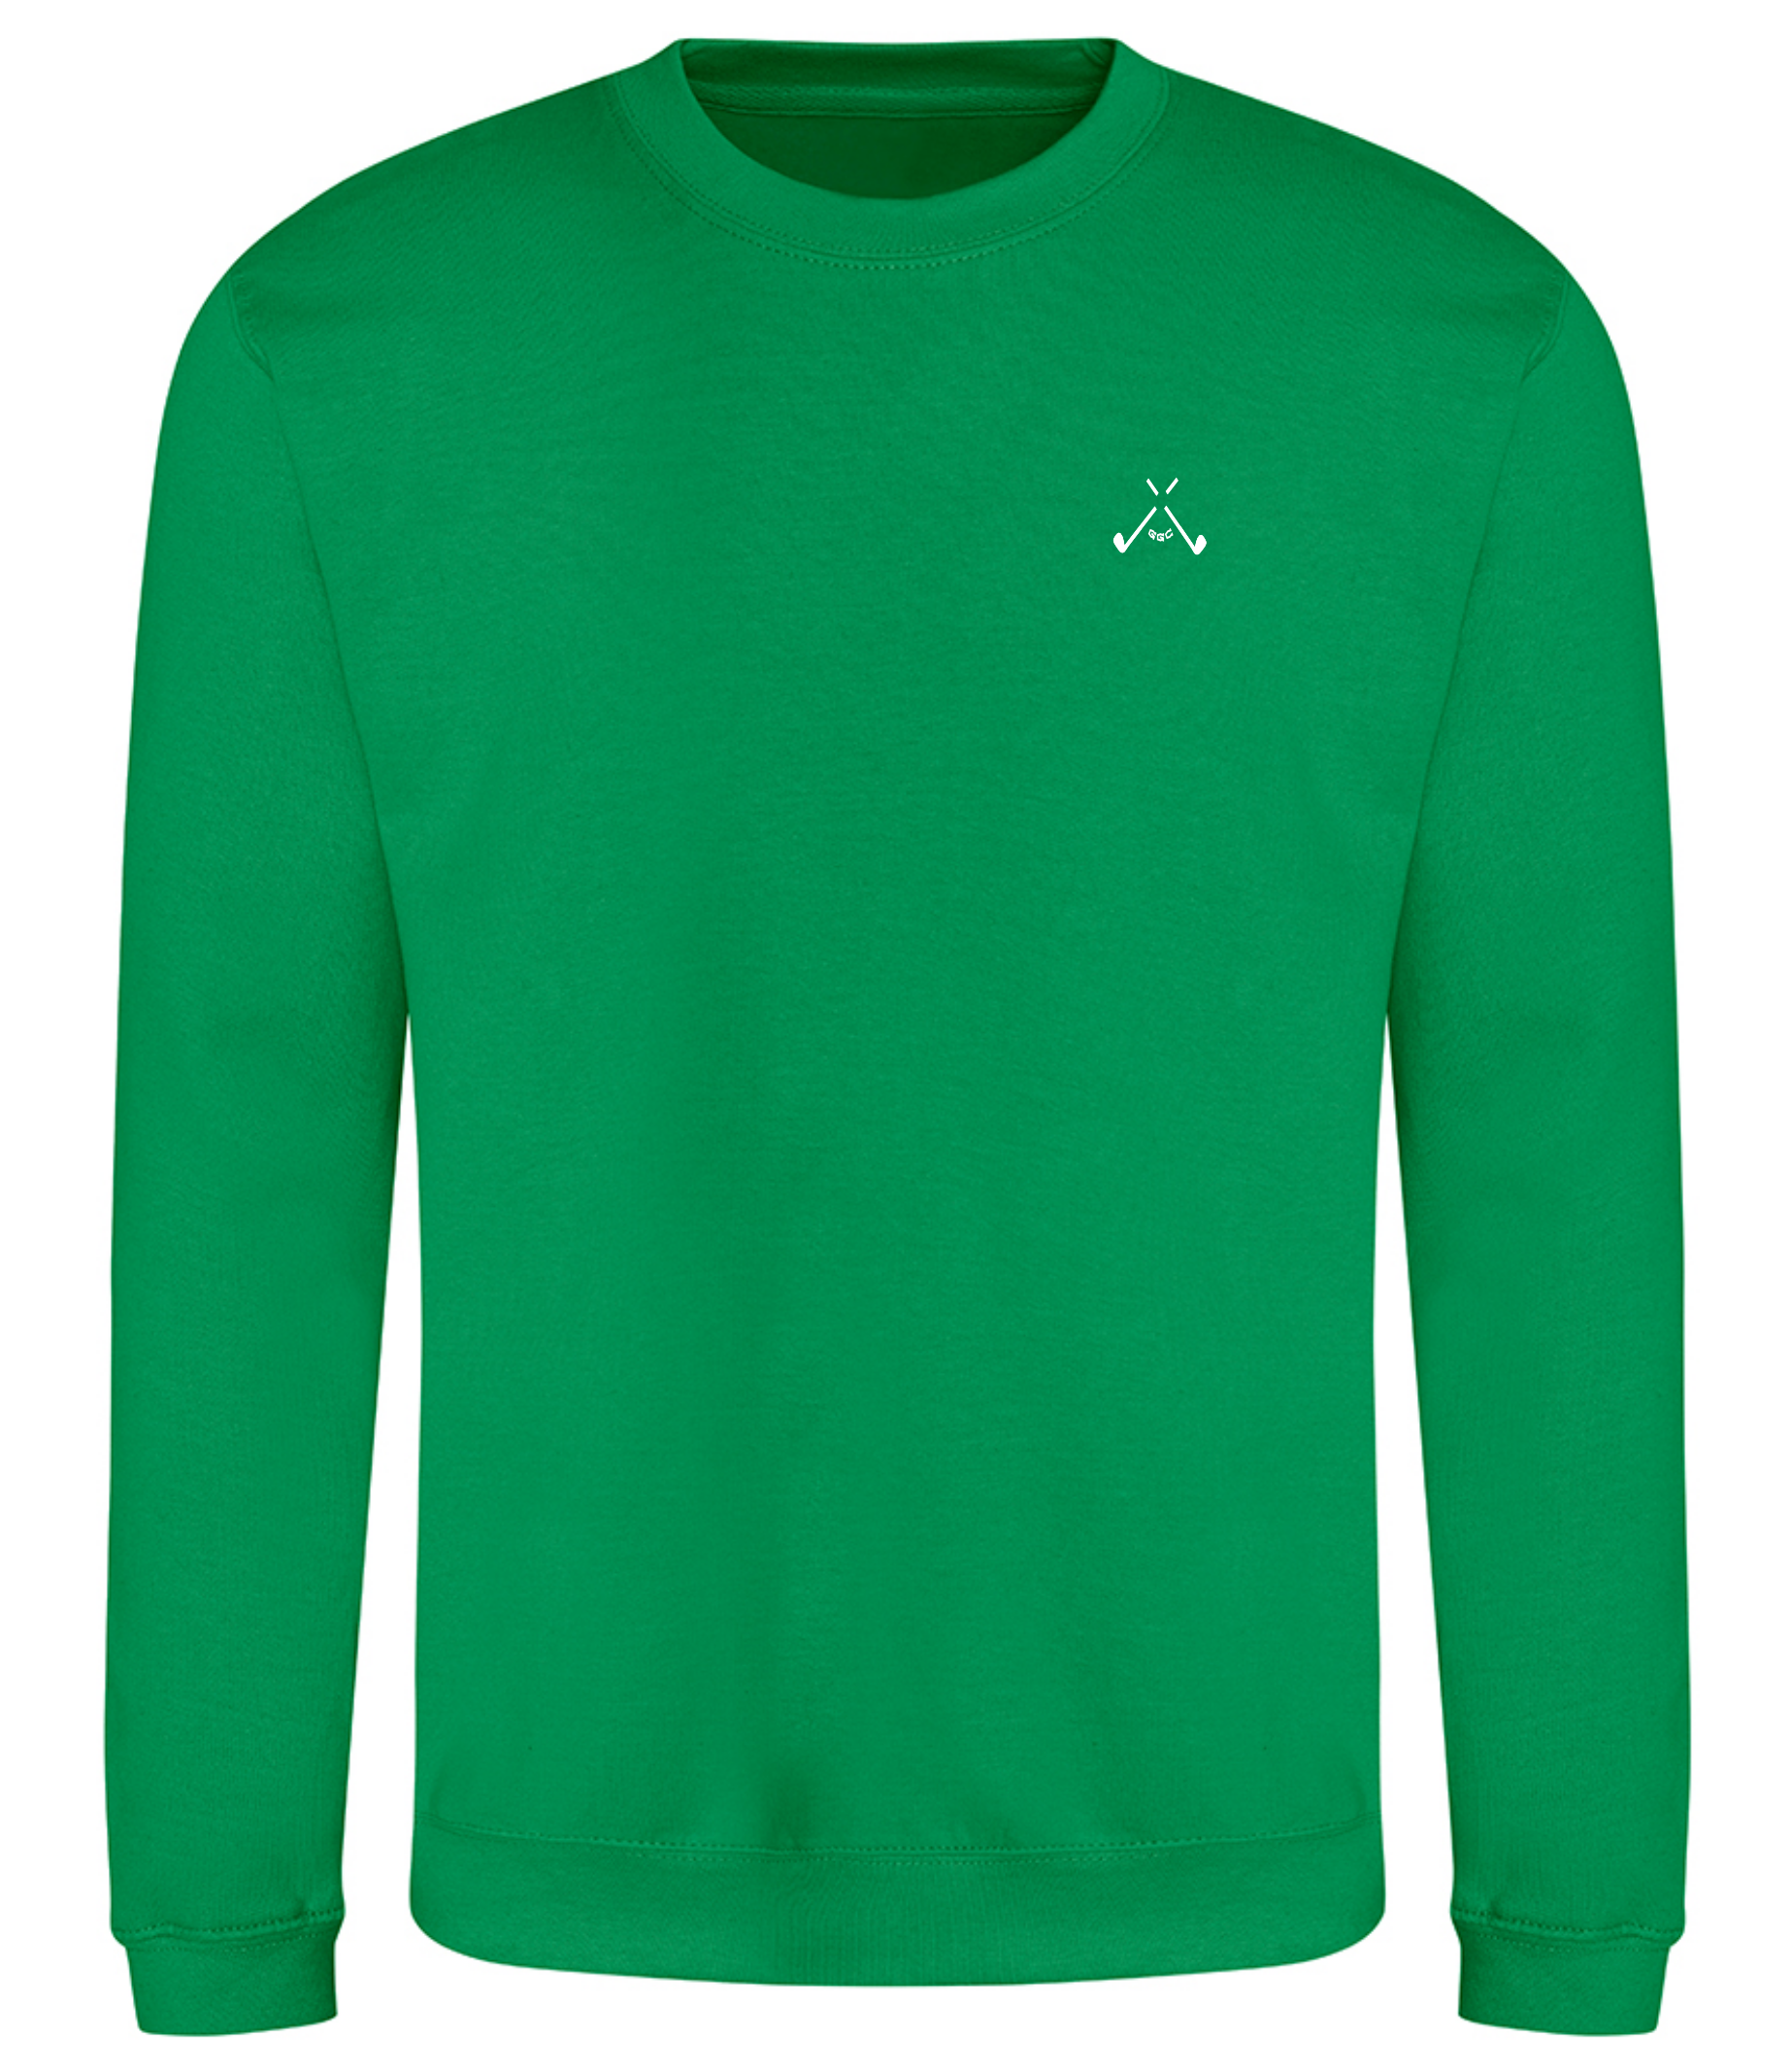 golf god clothing crossed clubs kelly green sweatshirt